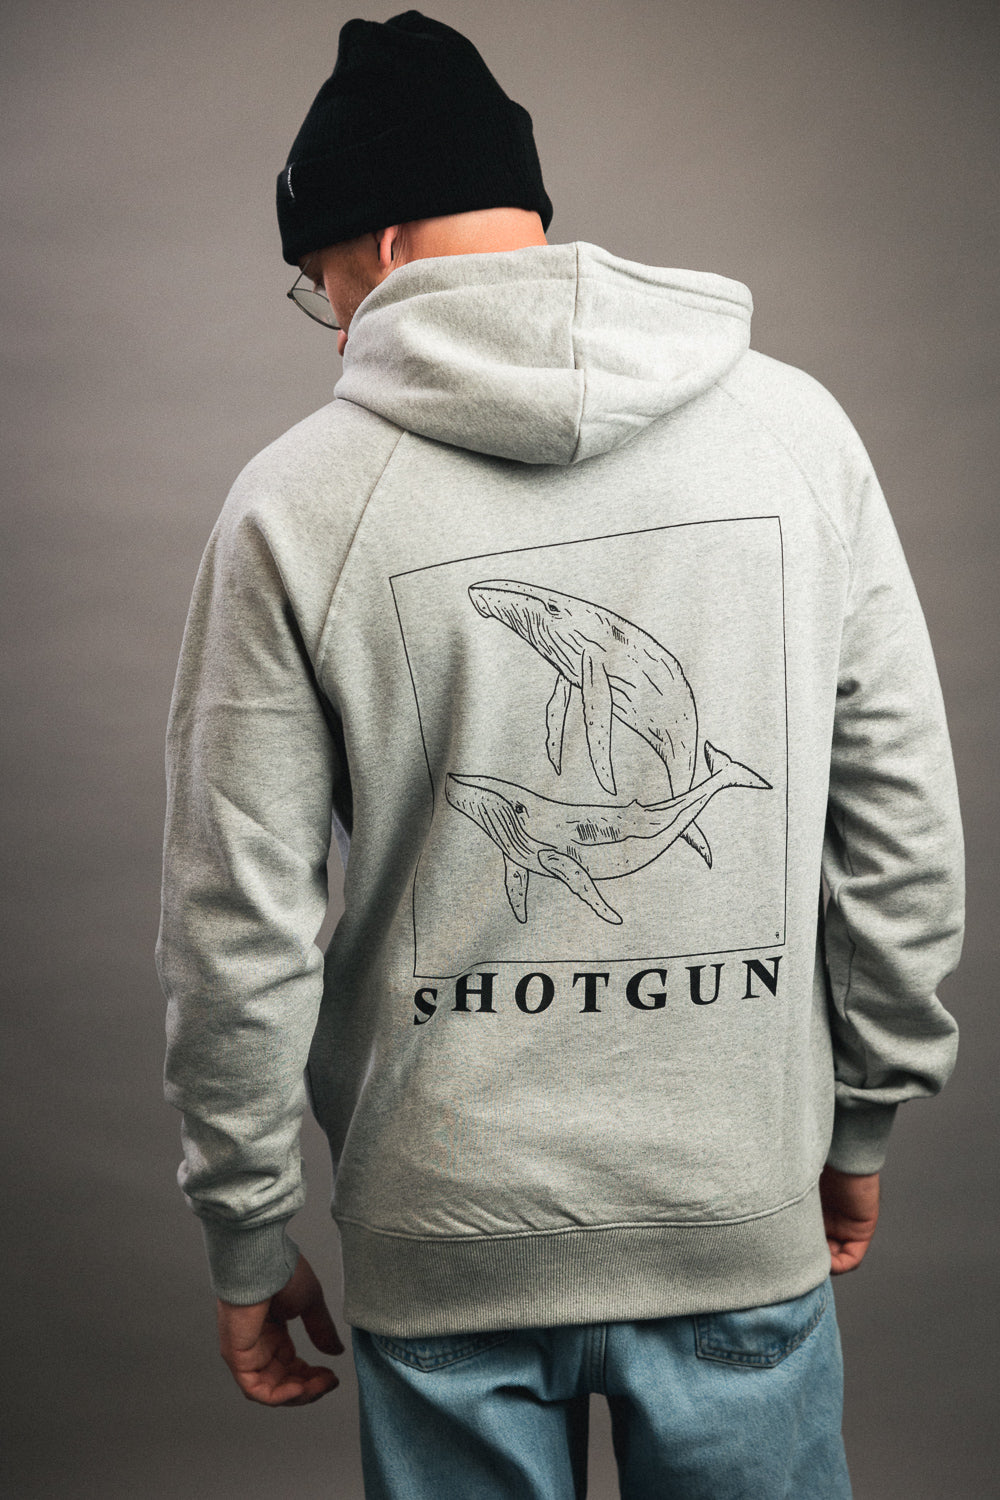 Shotgun Hoodie | whales